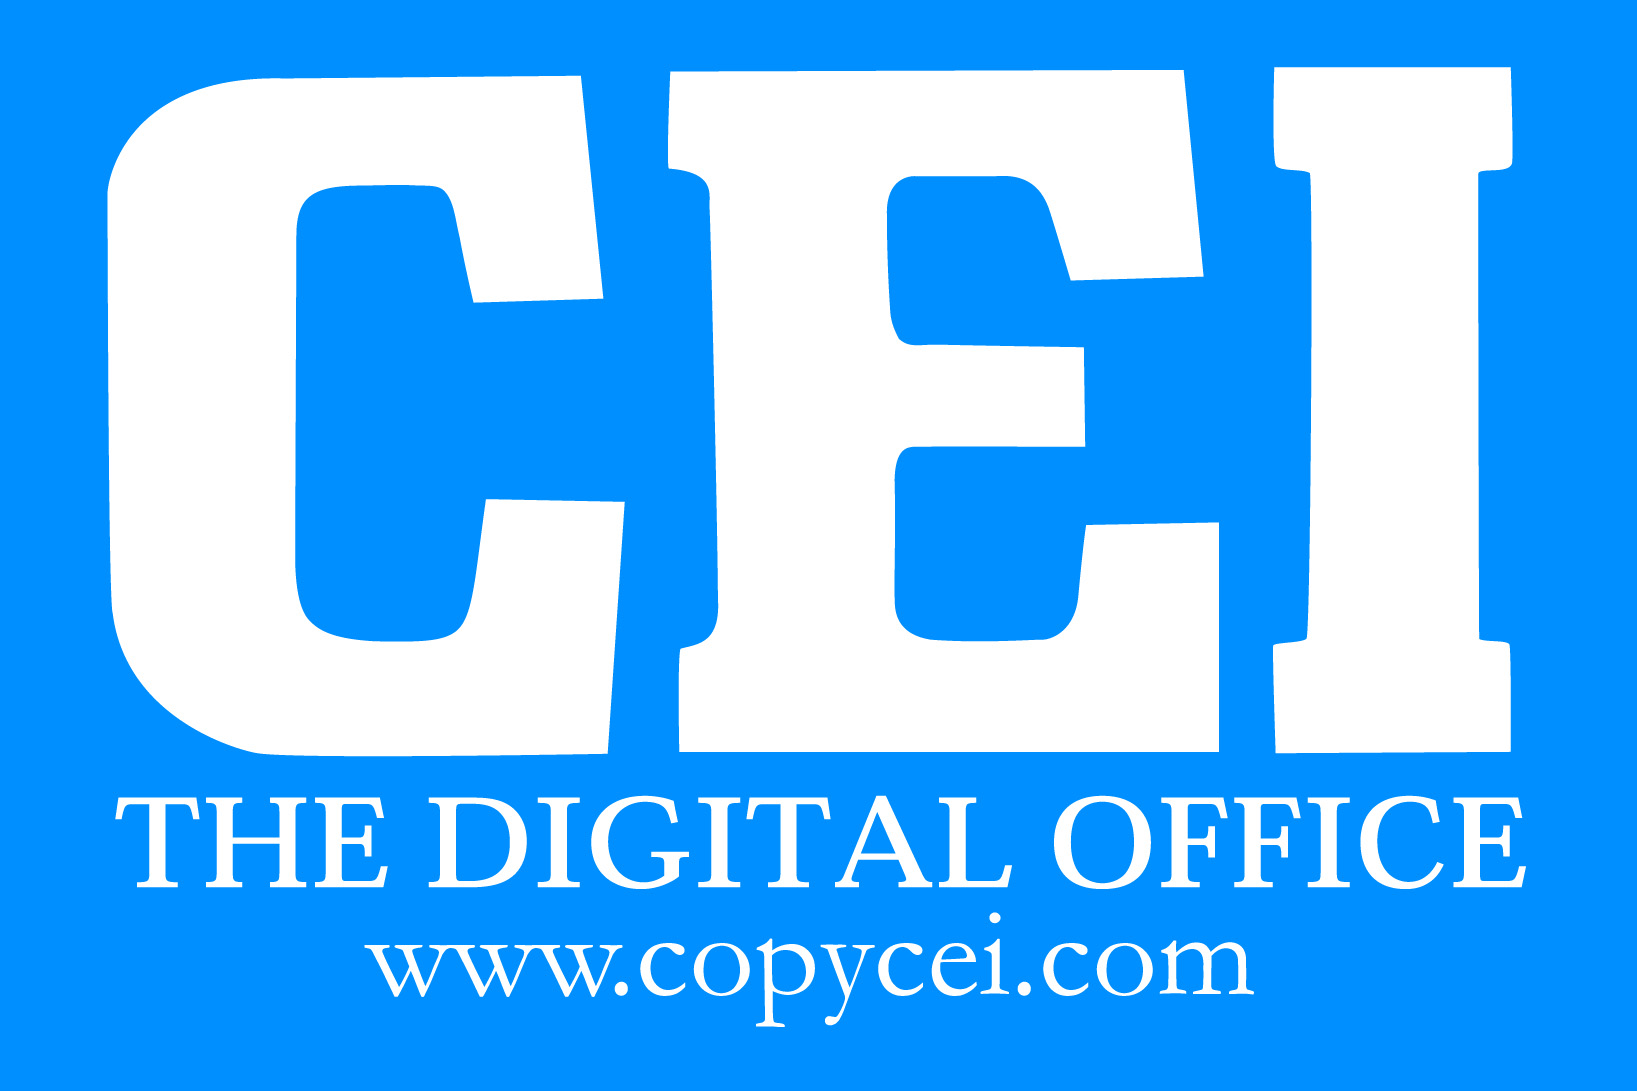 CEI –The Digital Office